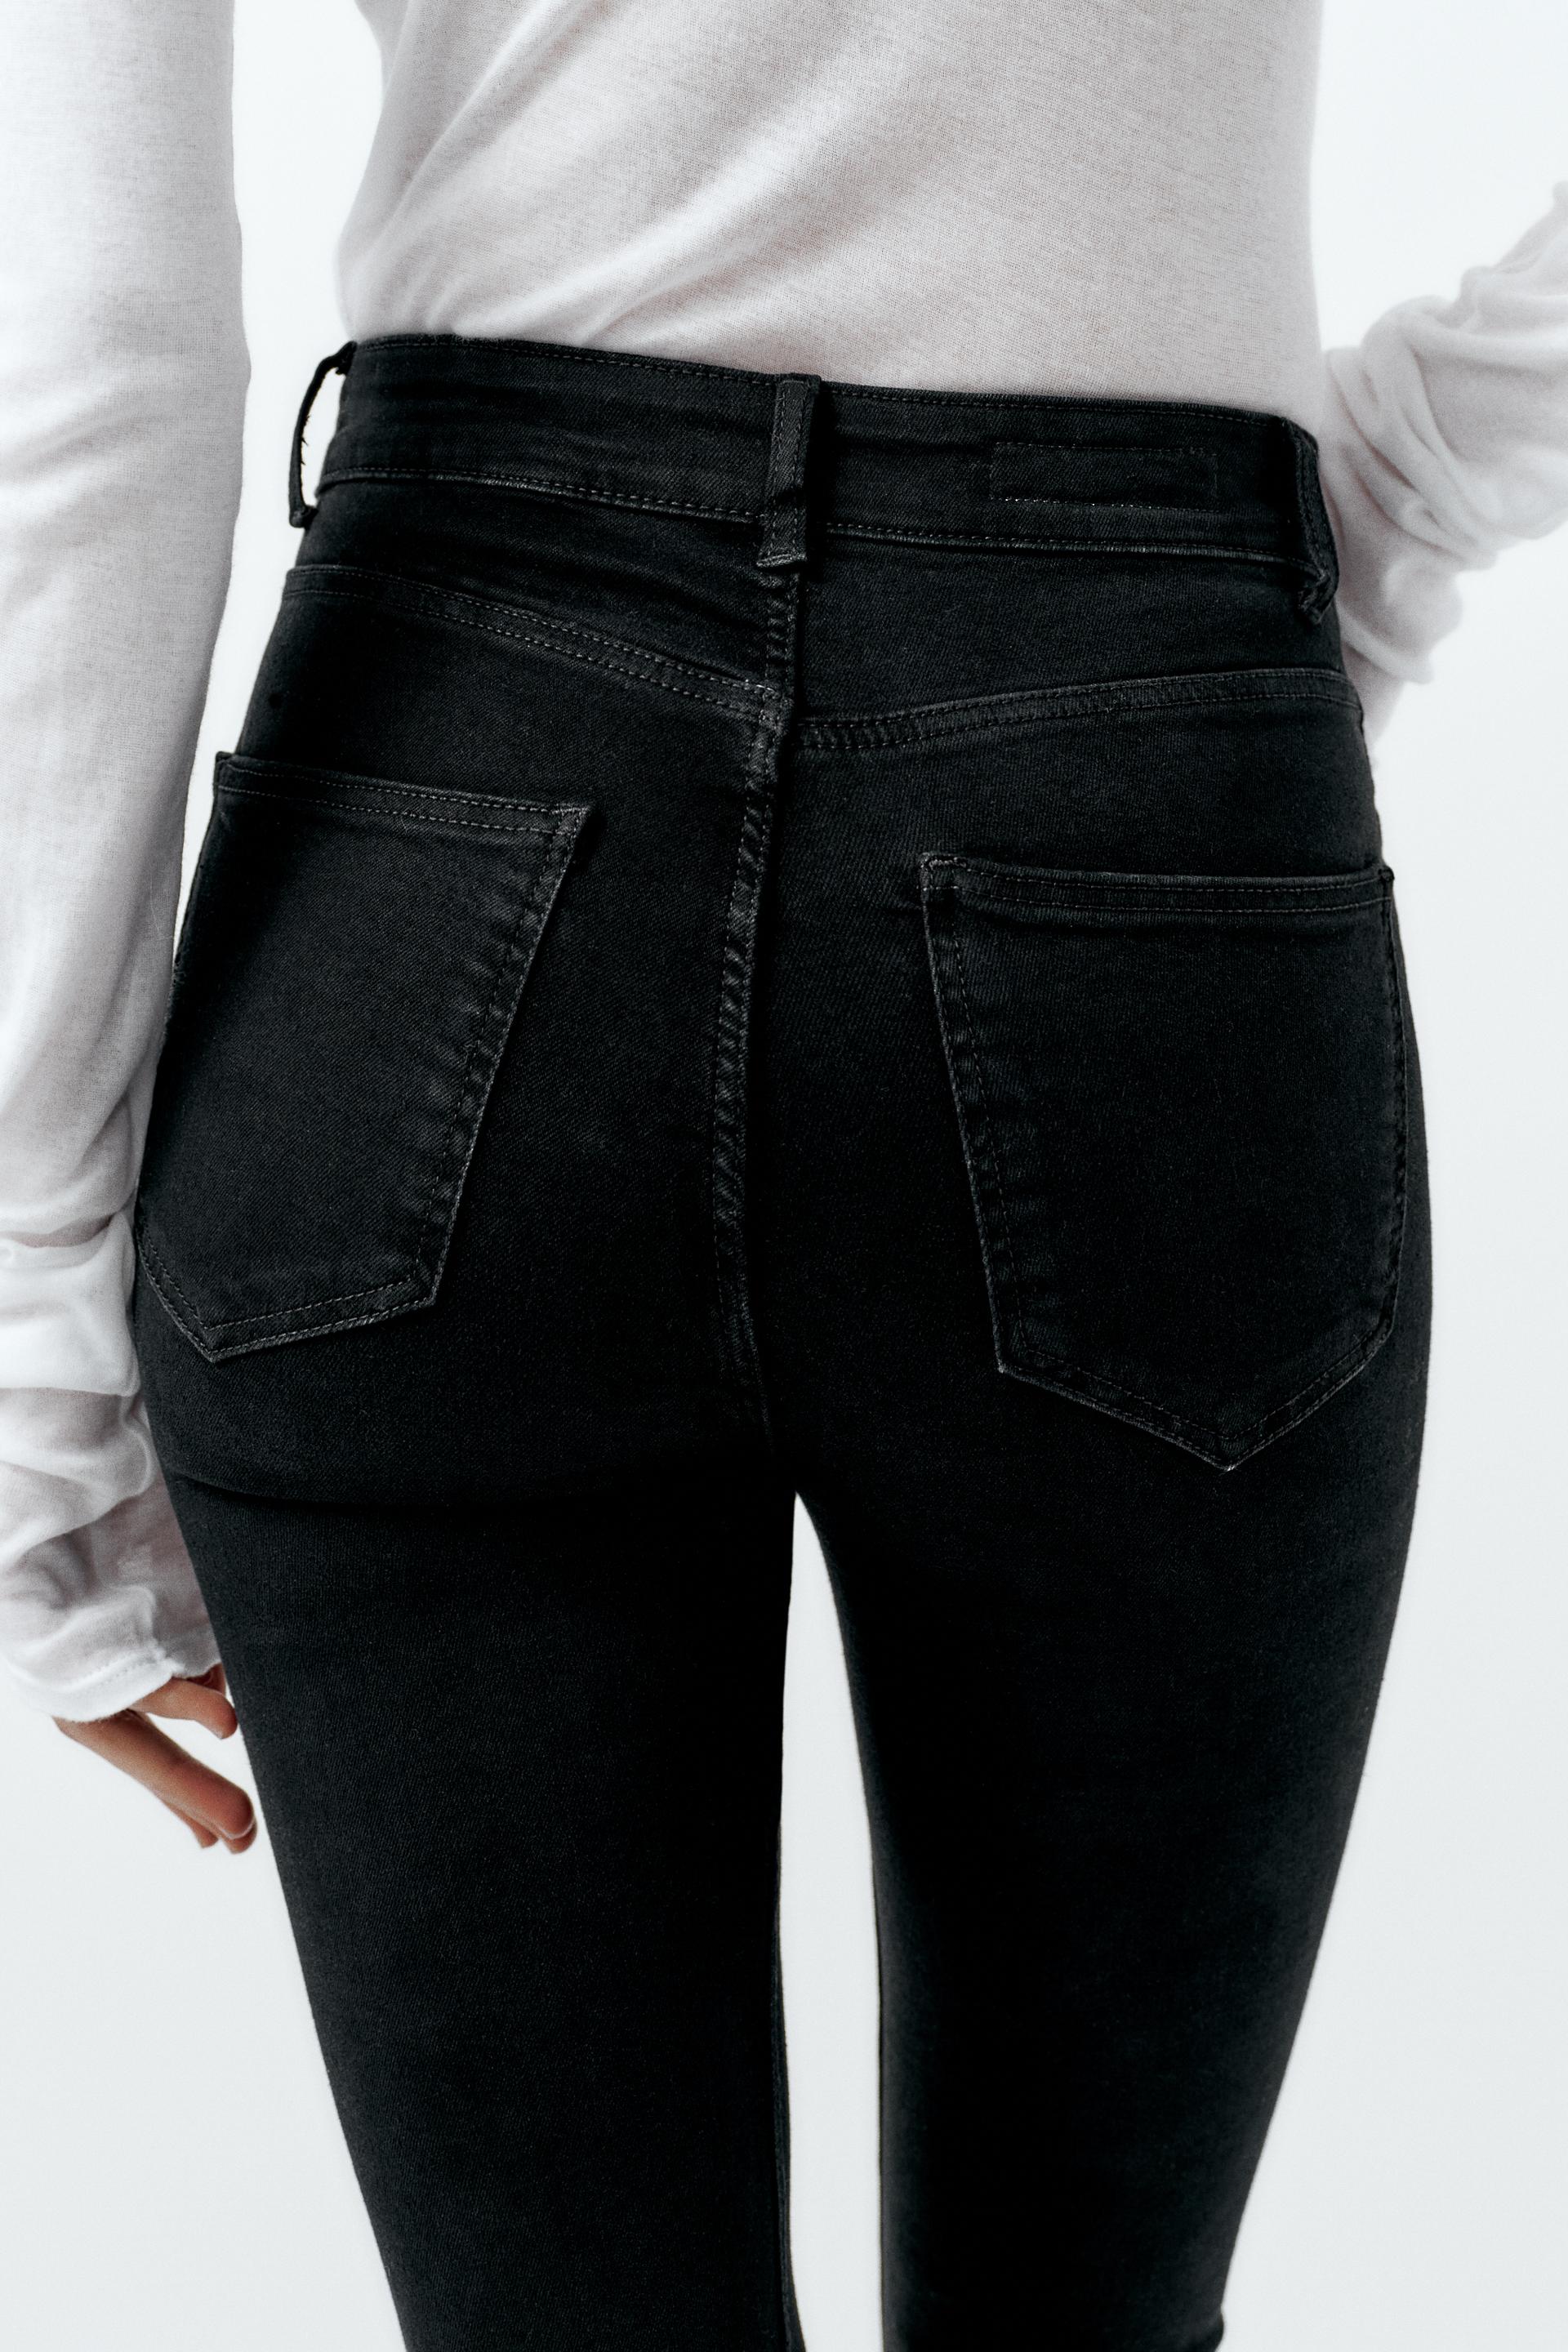 C&A Women's 5-Pocket Shapewear Jeans Casual Skinny Mid Rise / Mid Waist  Cotton Lycra® Stretch Denim Black 36 S, black, 36W / 30L : :  Fashion